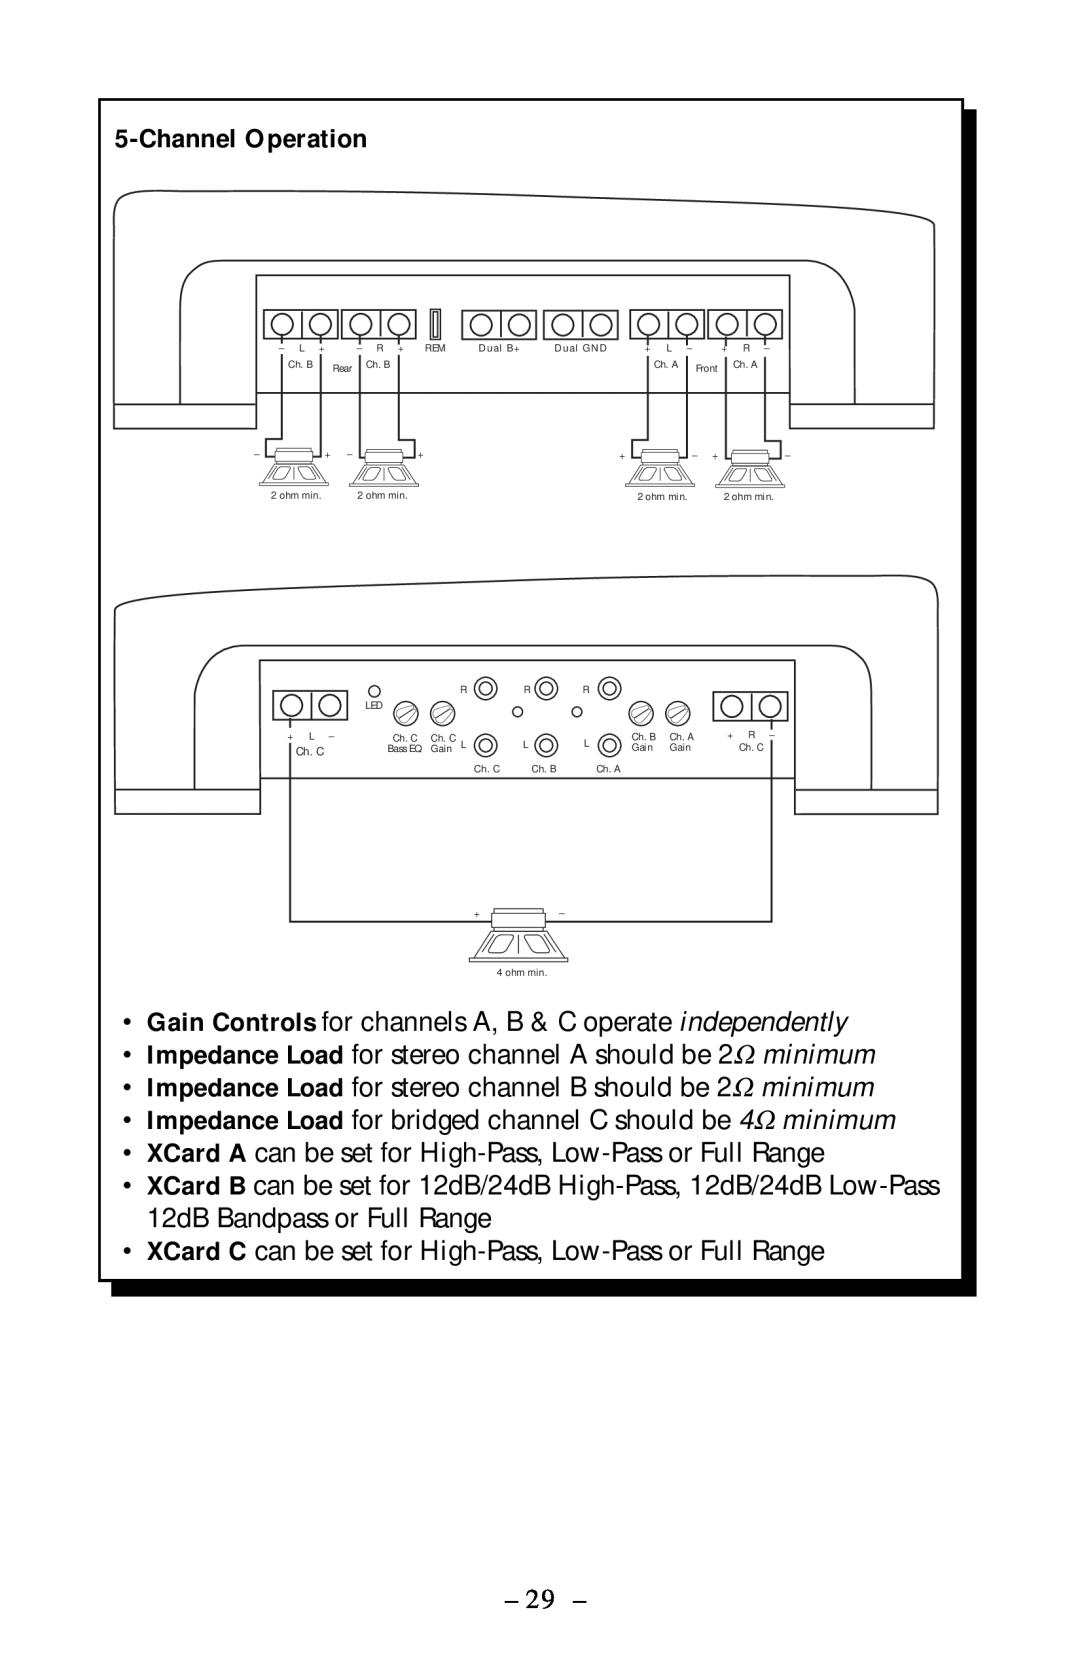 Rockford Fosgate 360.6 manual ChannelOperation 